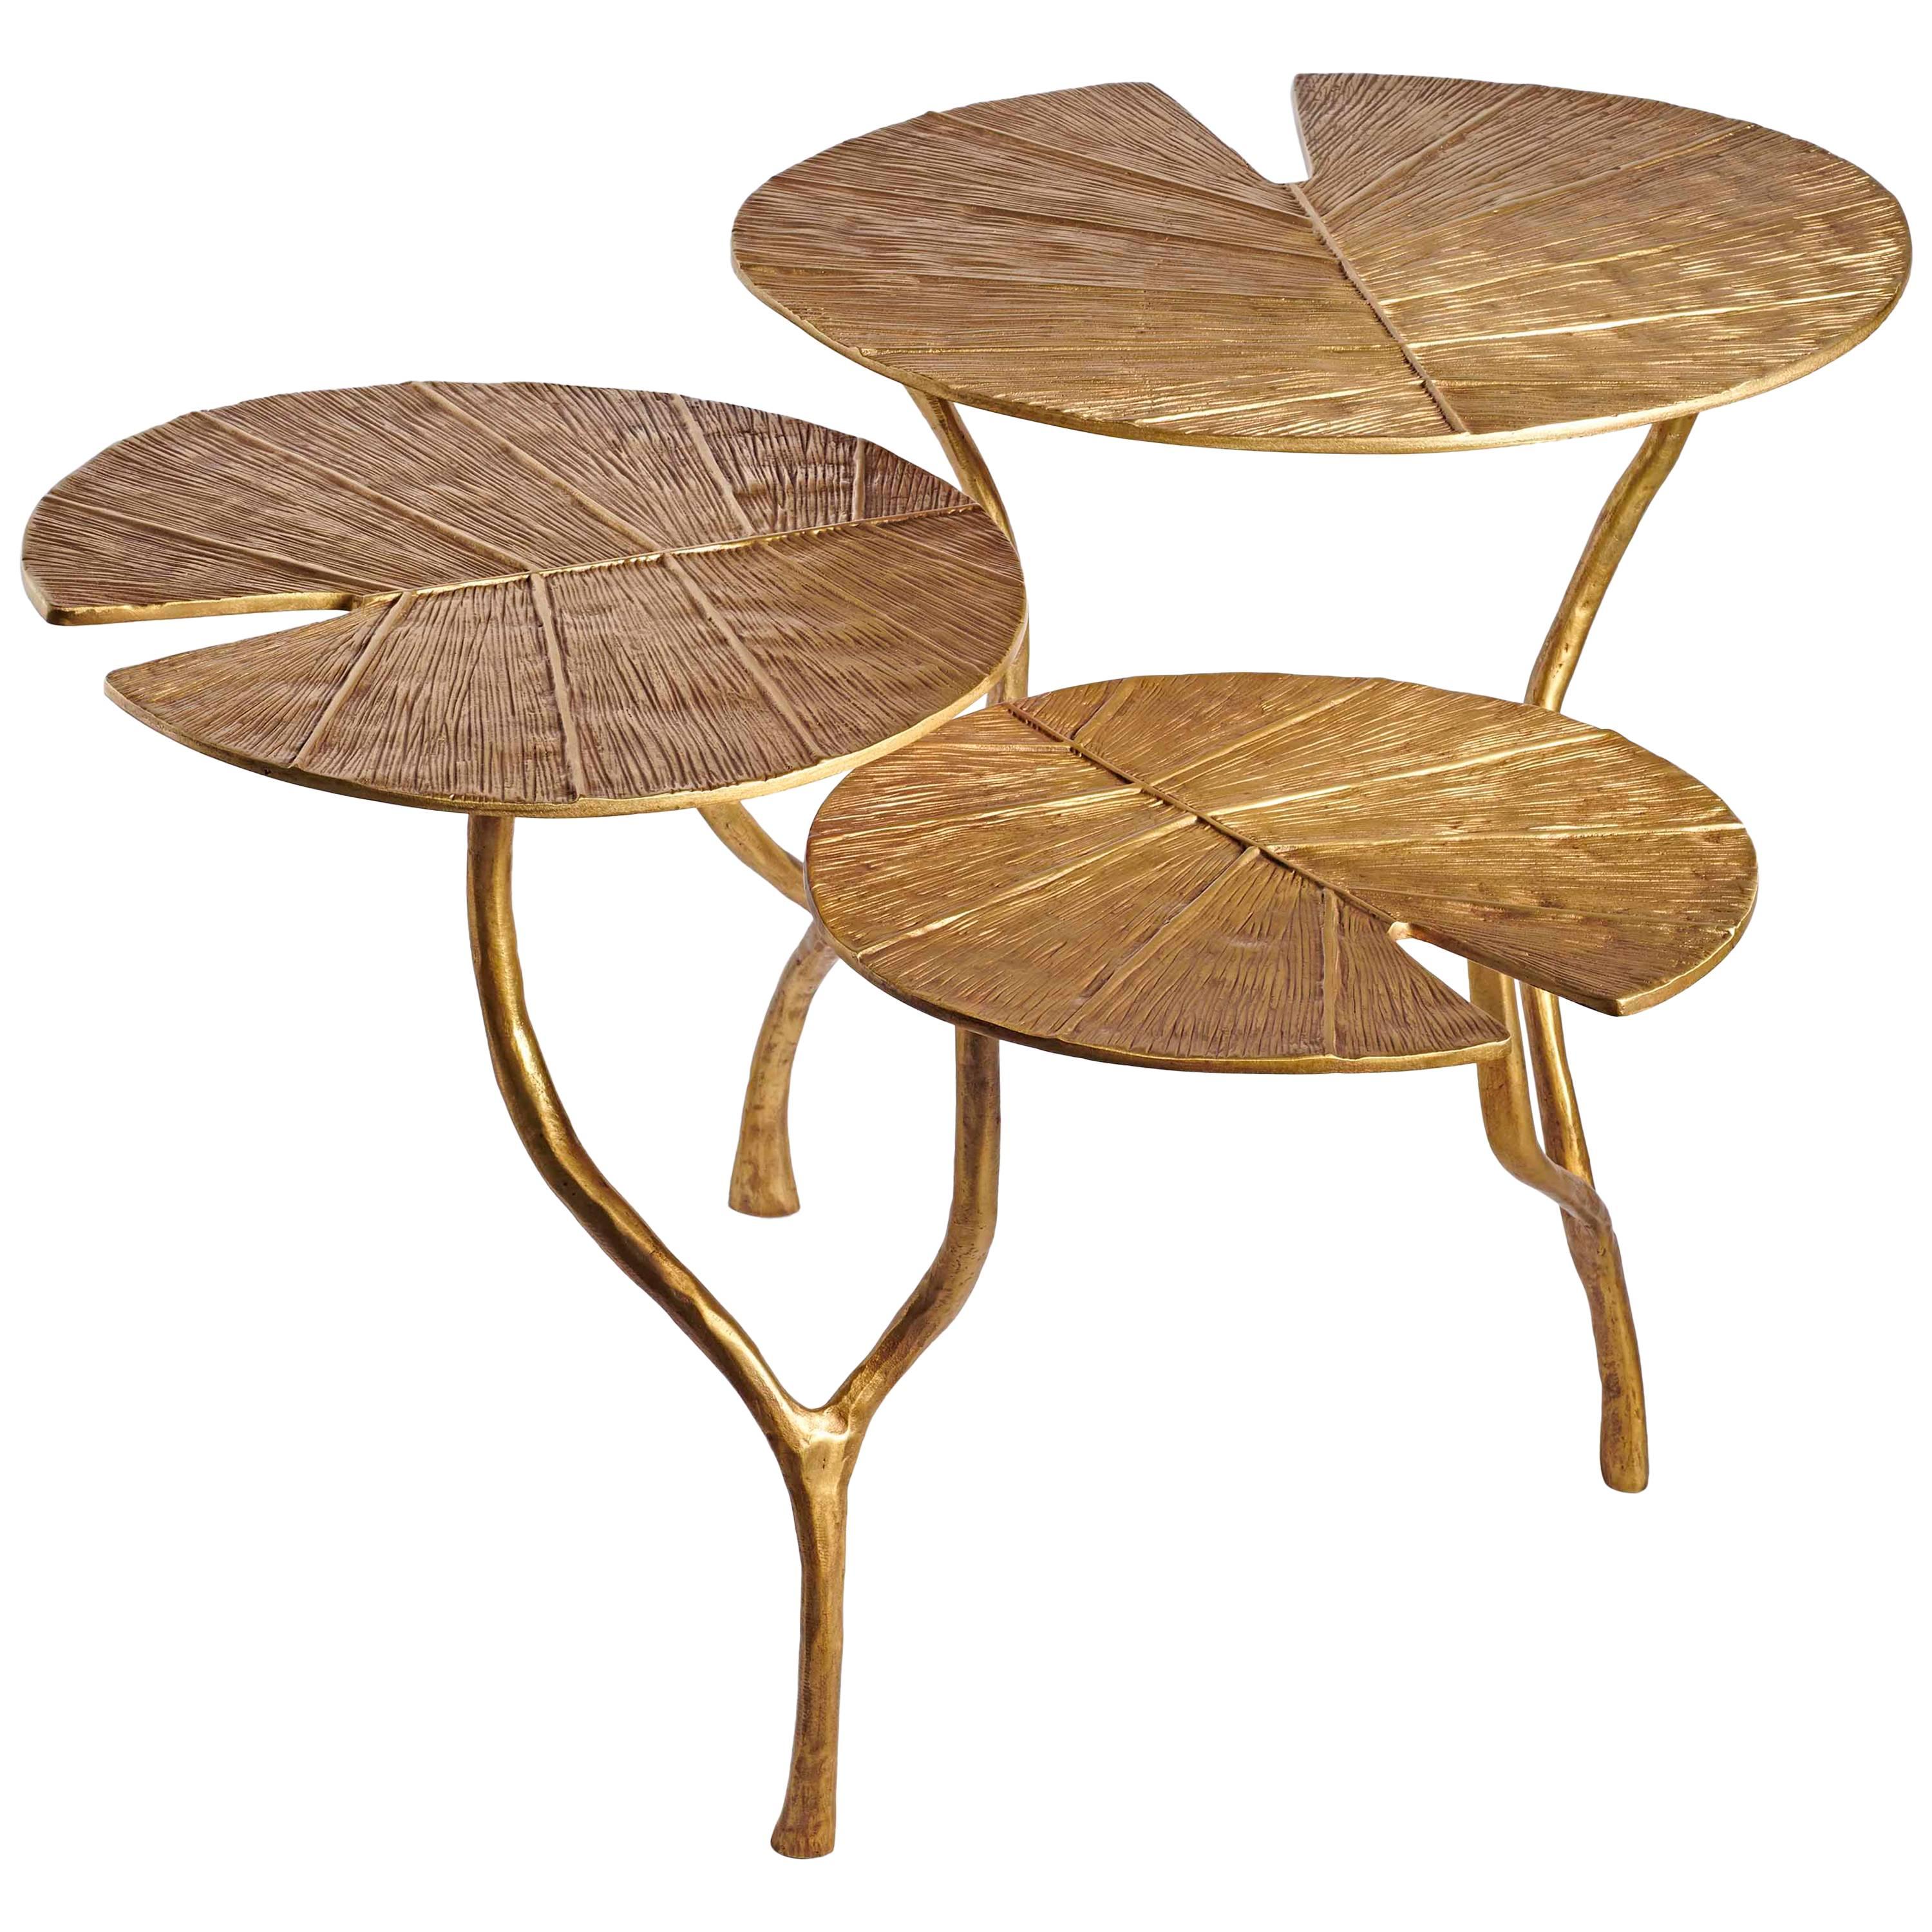 Franck Evennou, "Lotus" three Leaves coffee table